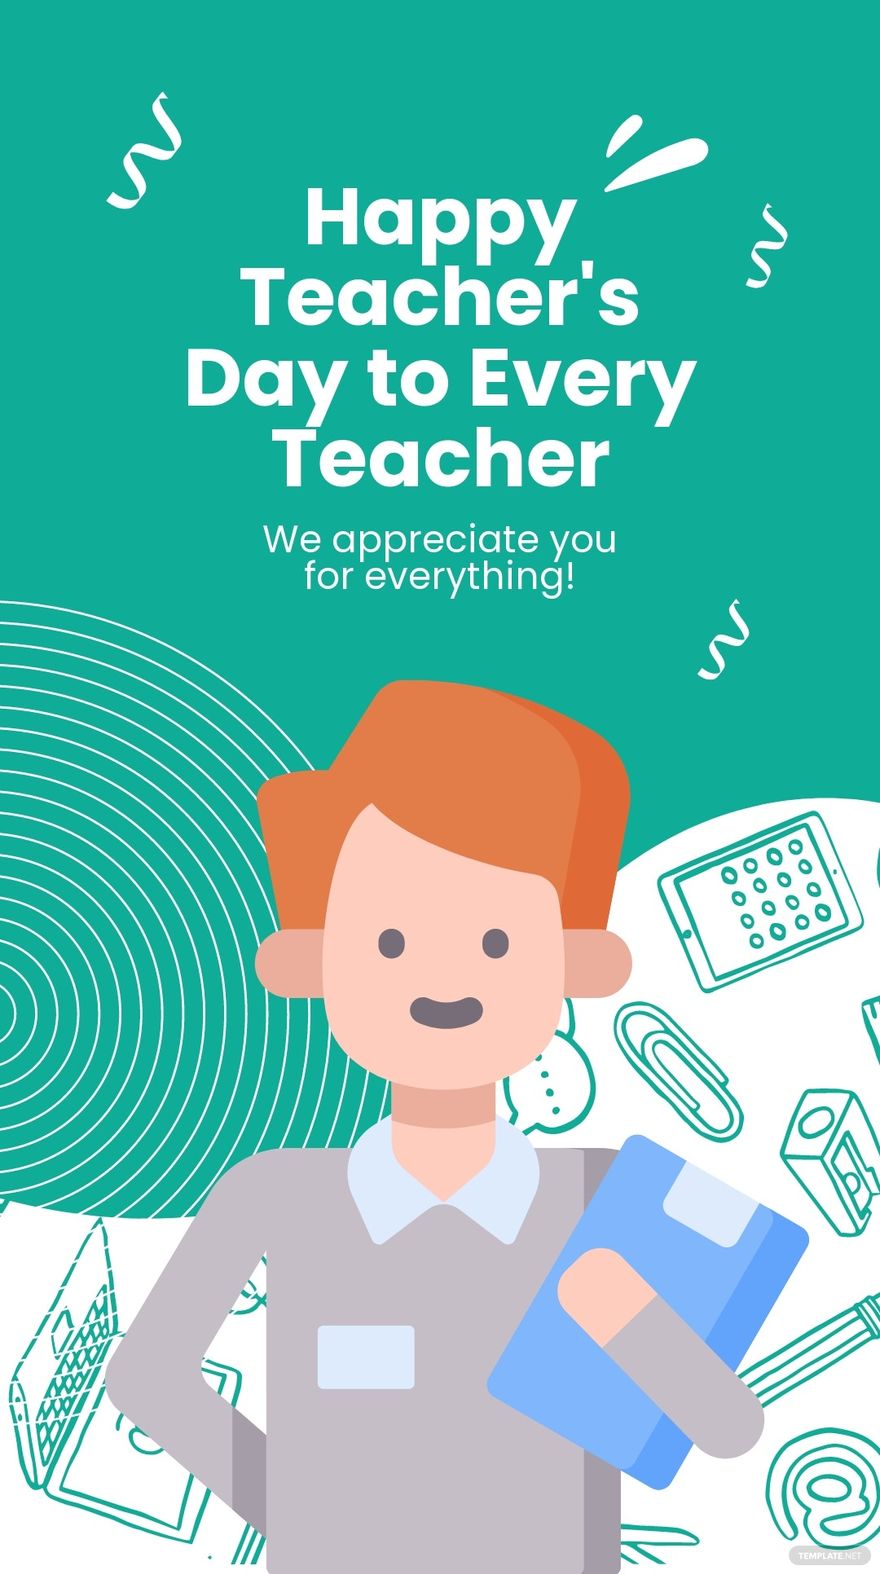 Teachers Day Whatsapp Post Templates - Design, Free, Download ...